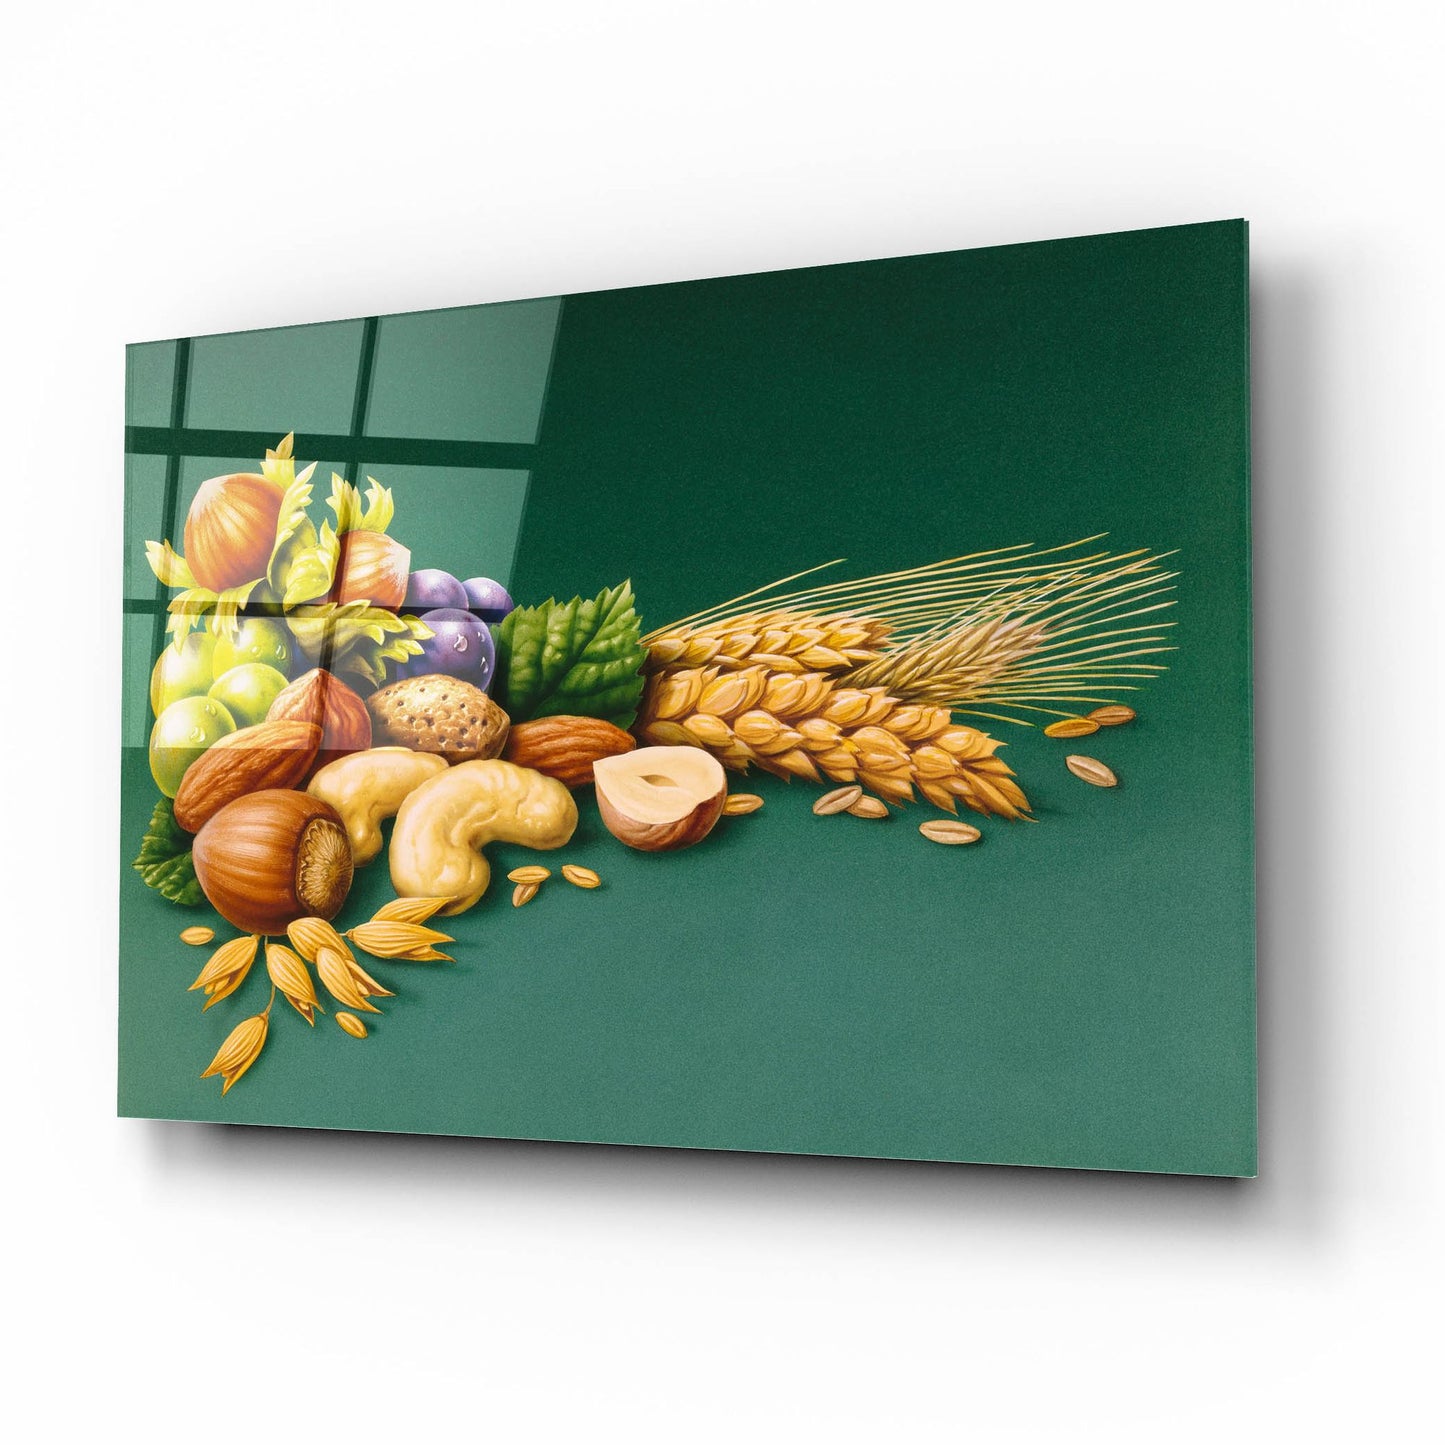 Epic Art 'Nuts' by Harro Maass, Acrylic Glass Wall Art,16x12